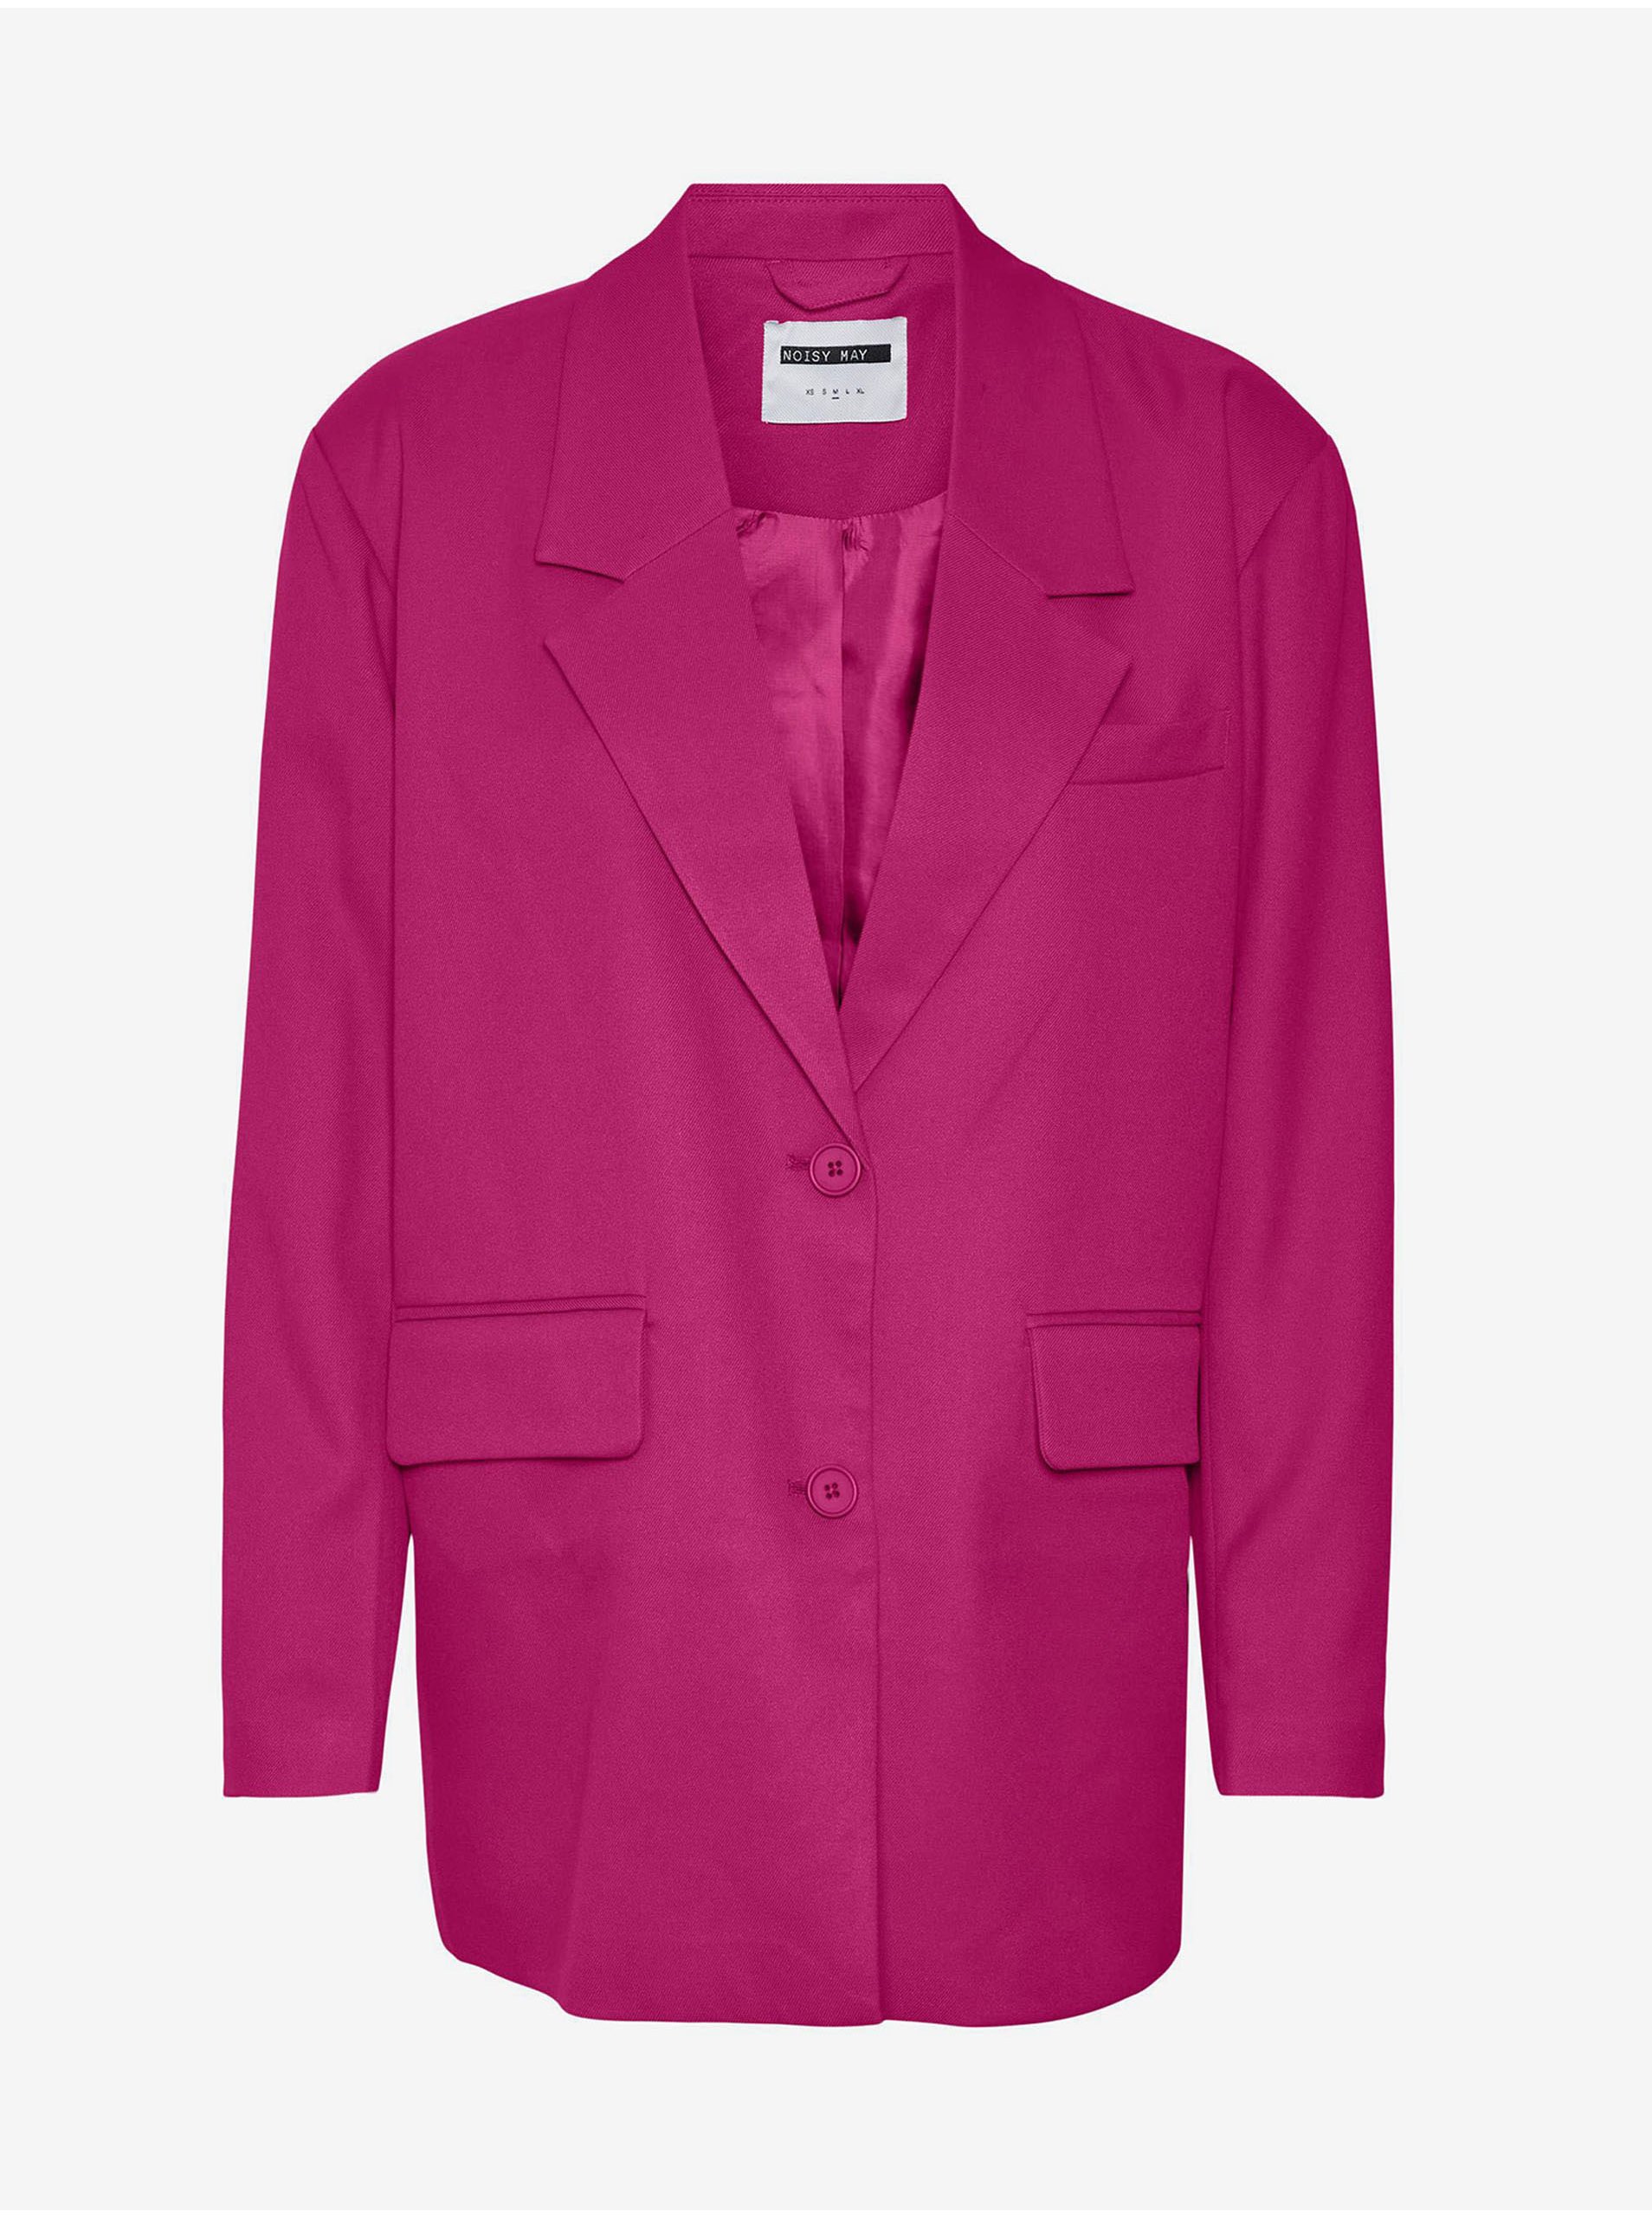 Dark pink women's oversize jacket Noisy May Milla - Women